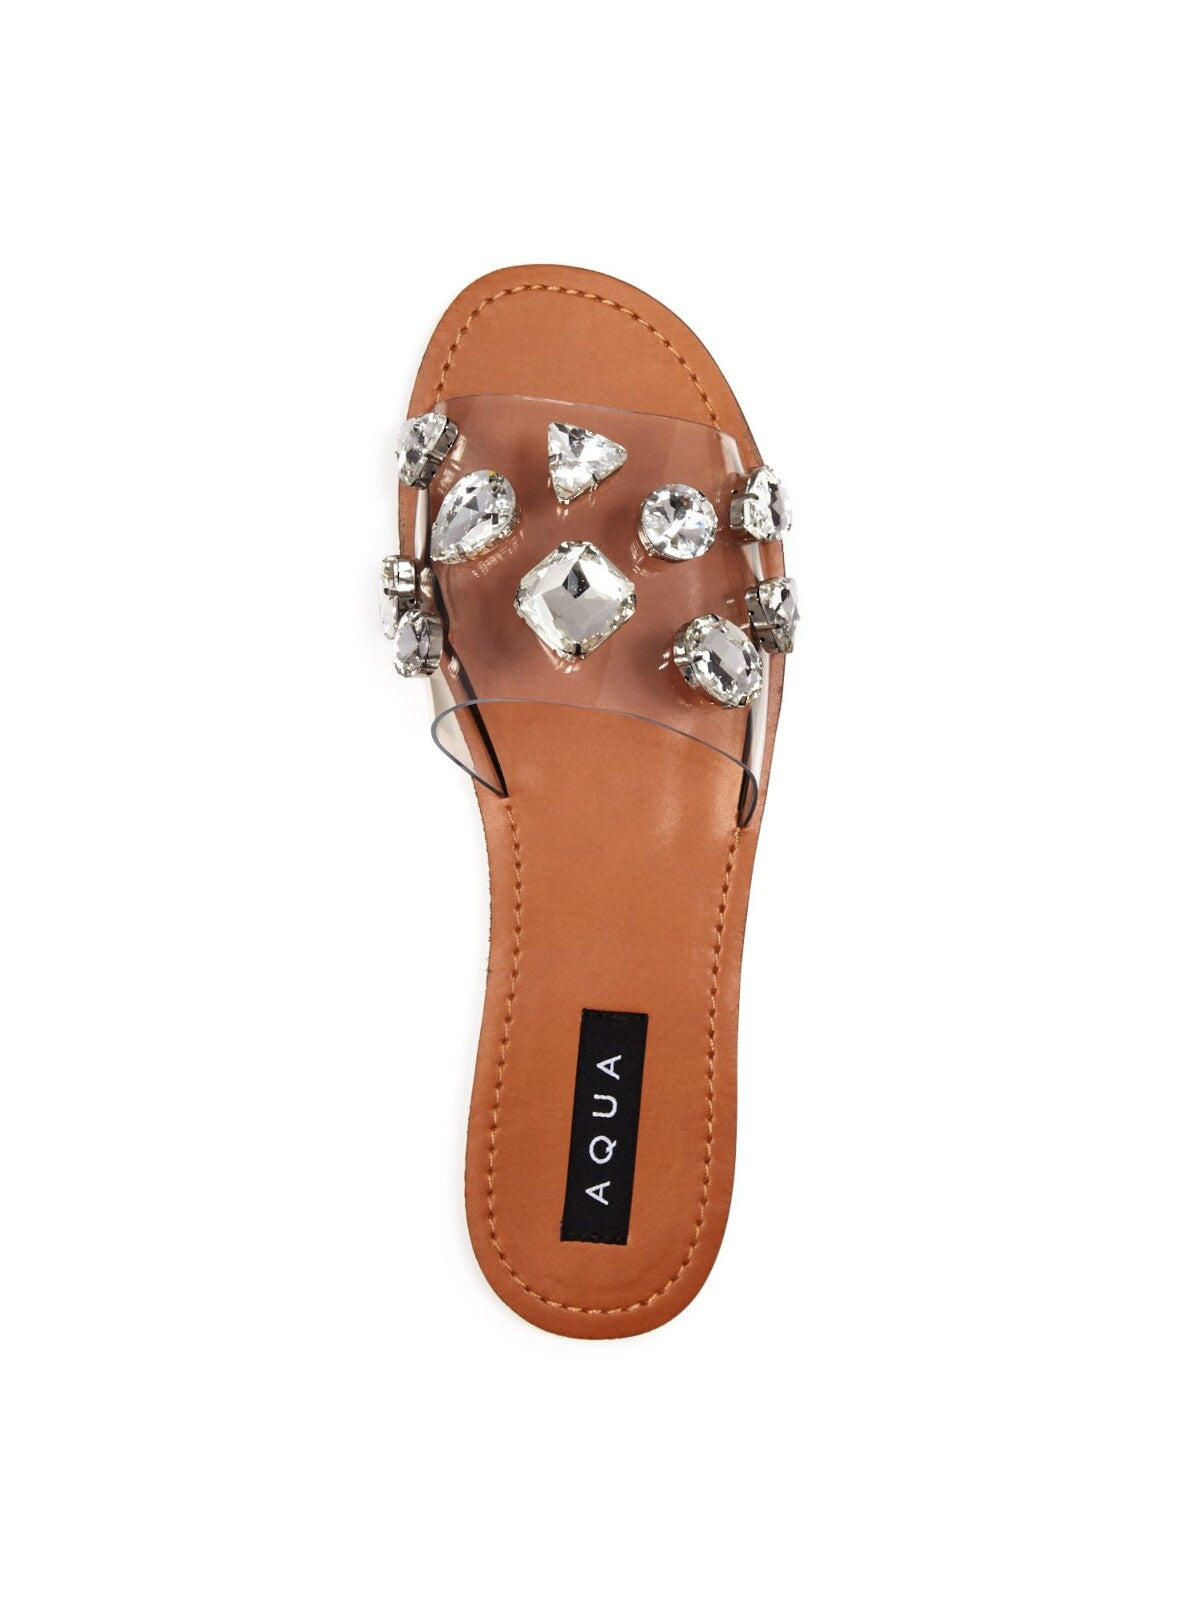 AQUA Womens Clear Translucent Strap Rhinestone Twink Round Toe Slip On Slide Sandals Shoes 6 M